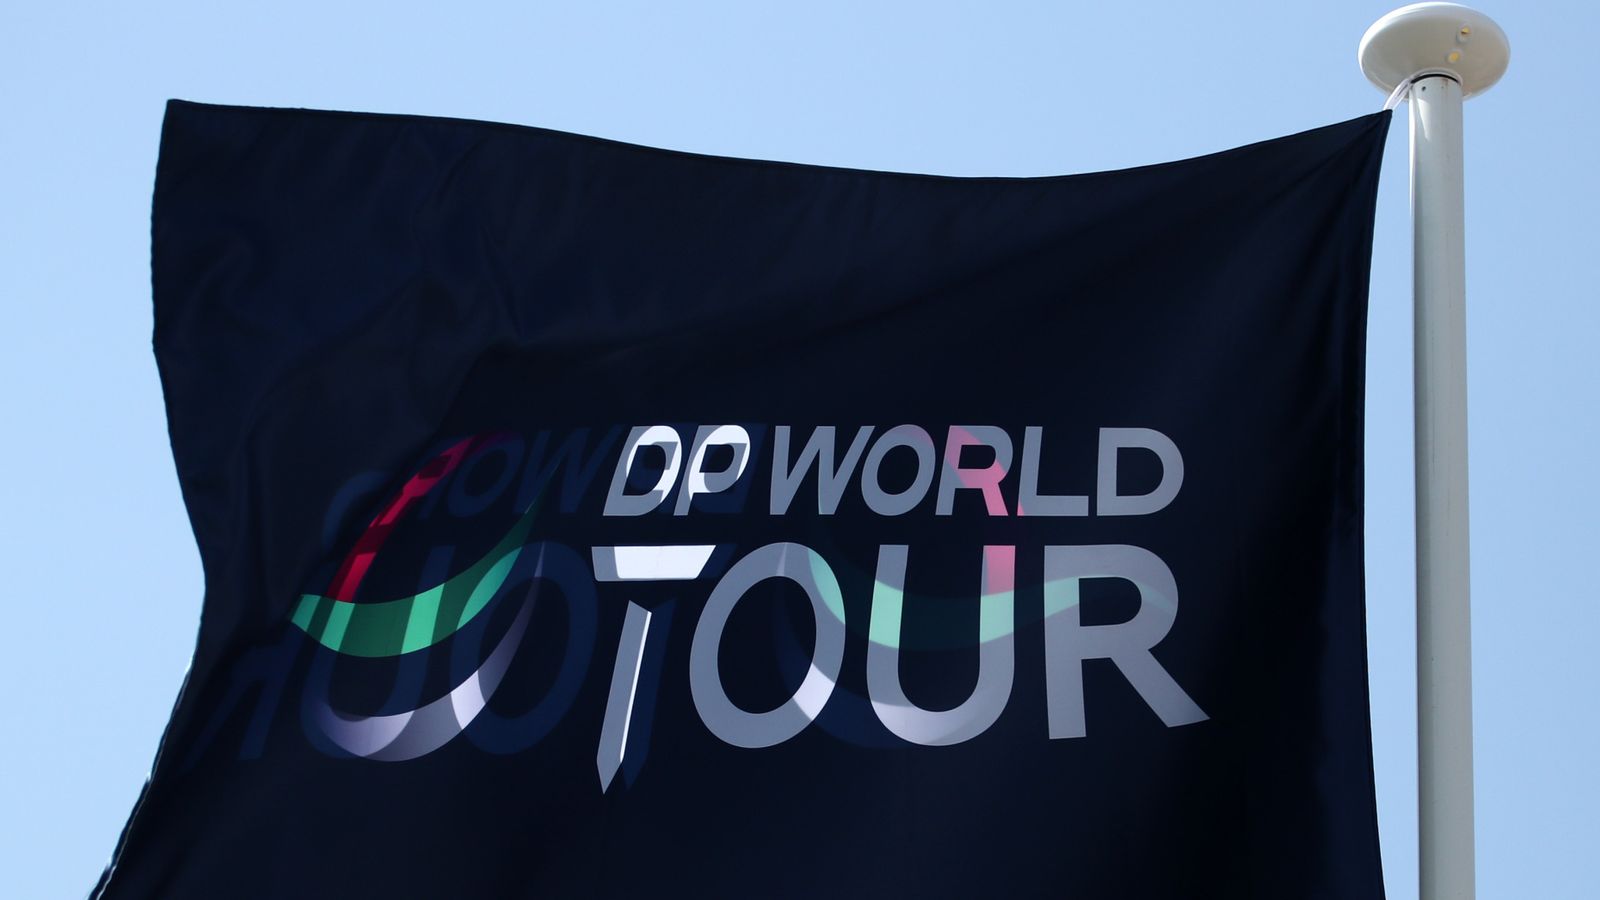 dp world tours